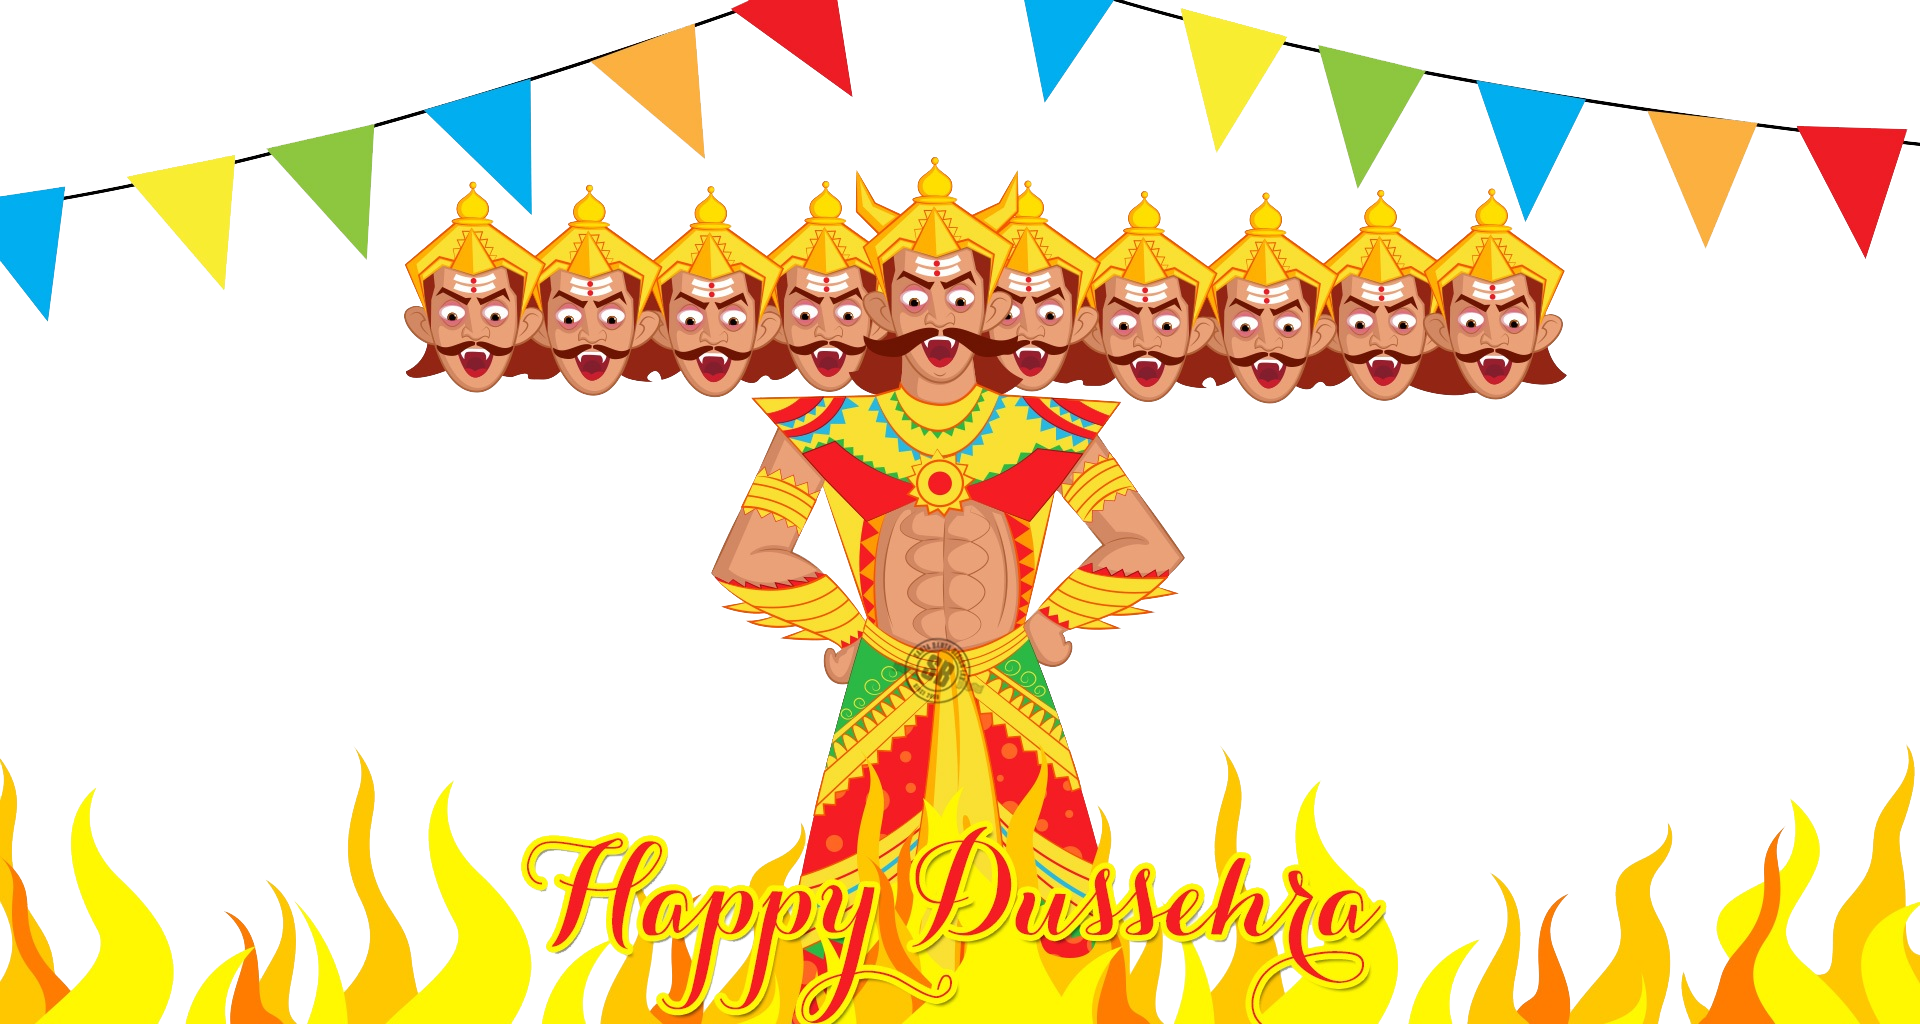 Happy Dussehra PNG Image